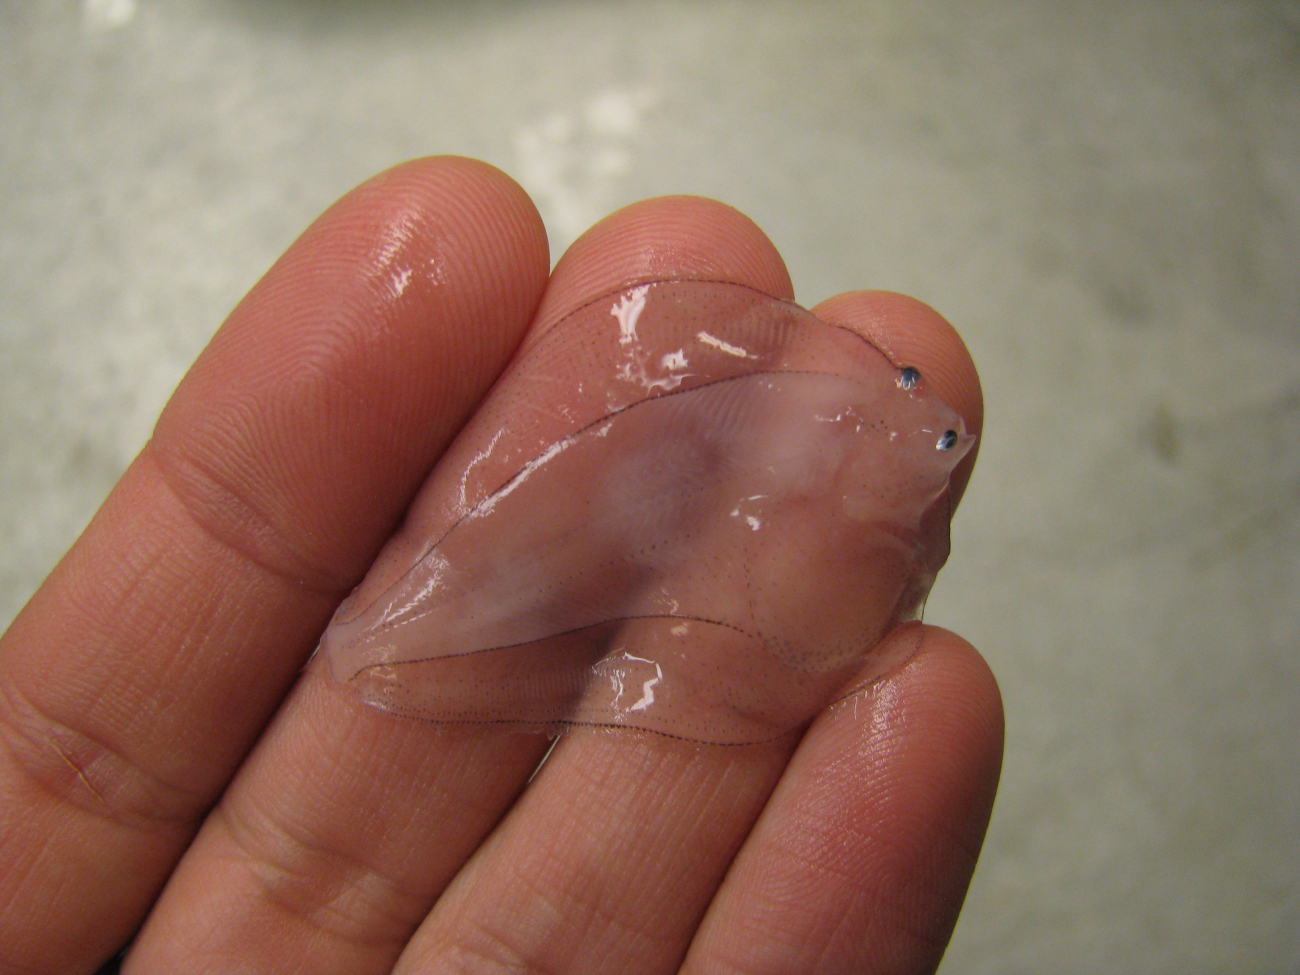 A juvenile flatfish